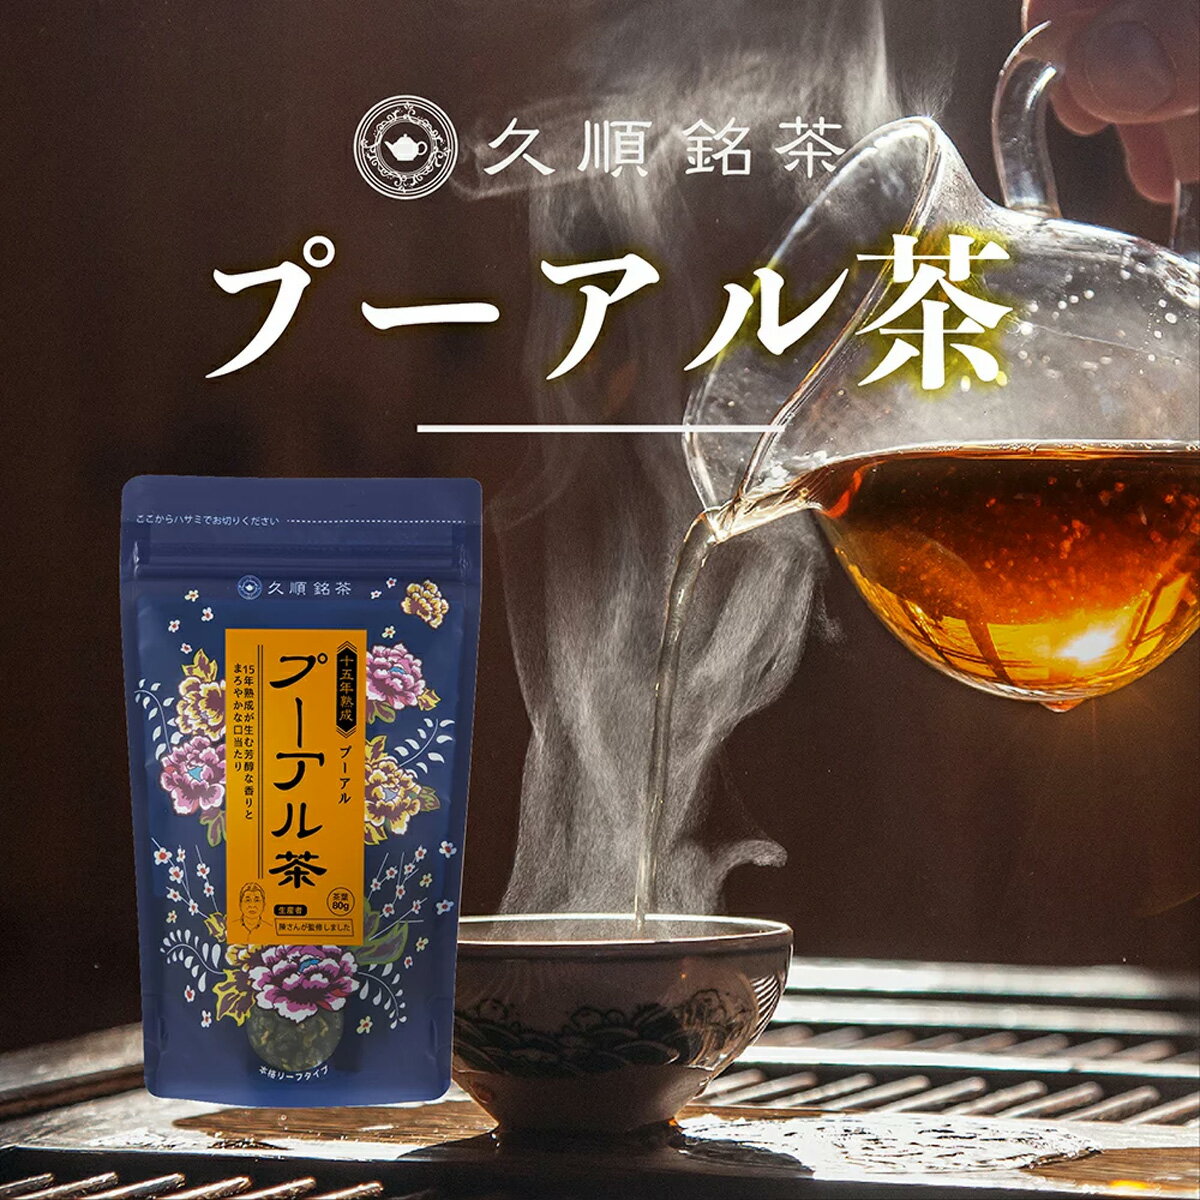 久順銘茶 台湾茶 中国茶 プーアル茶